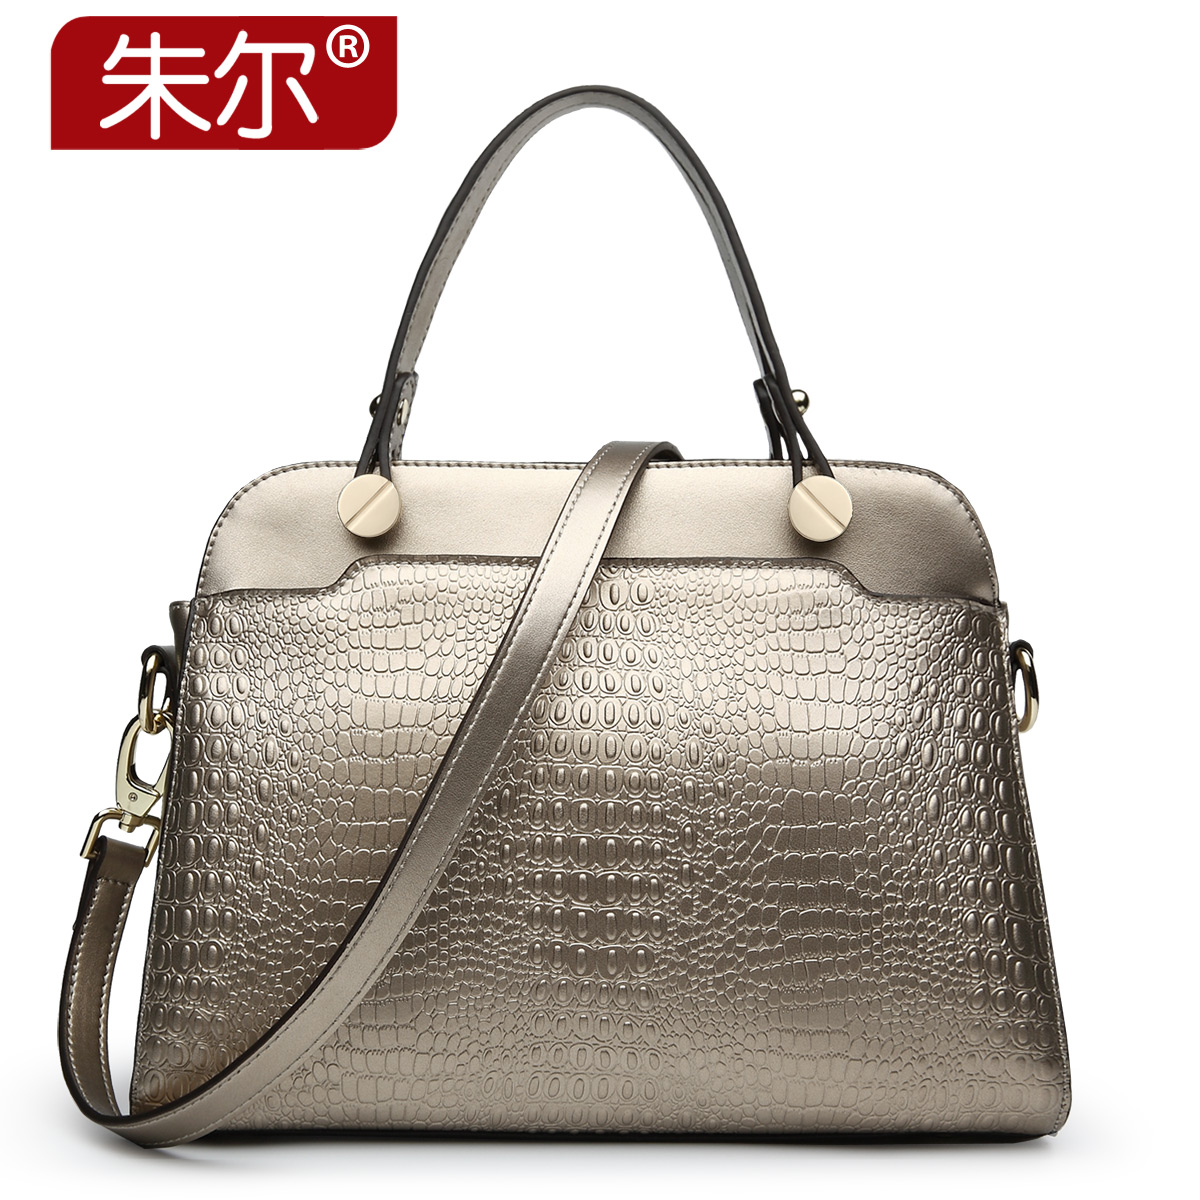 2015 for Crocodile women's cowhide handbag autumn new arrival women genuine leather bags fashion female handbag